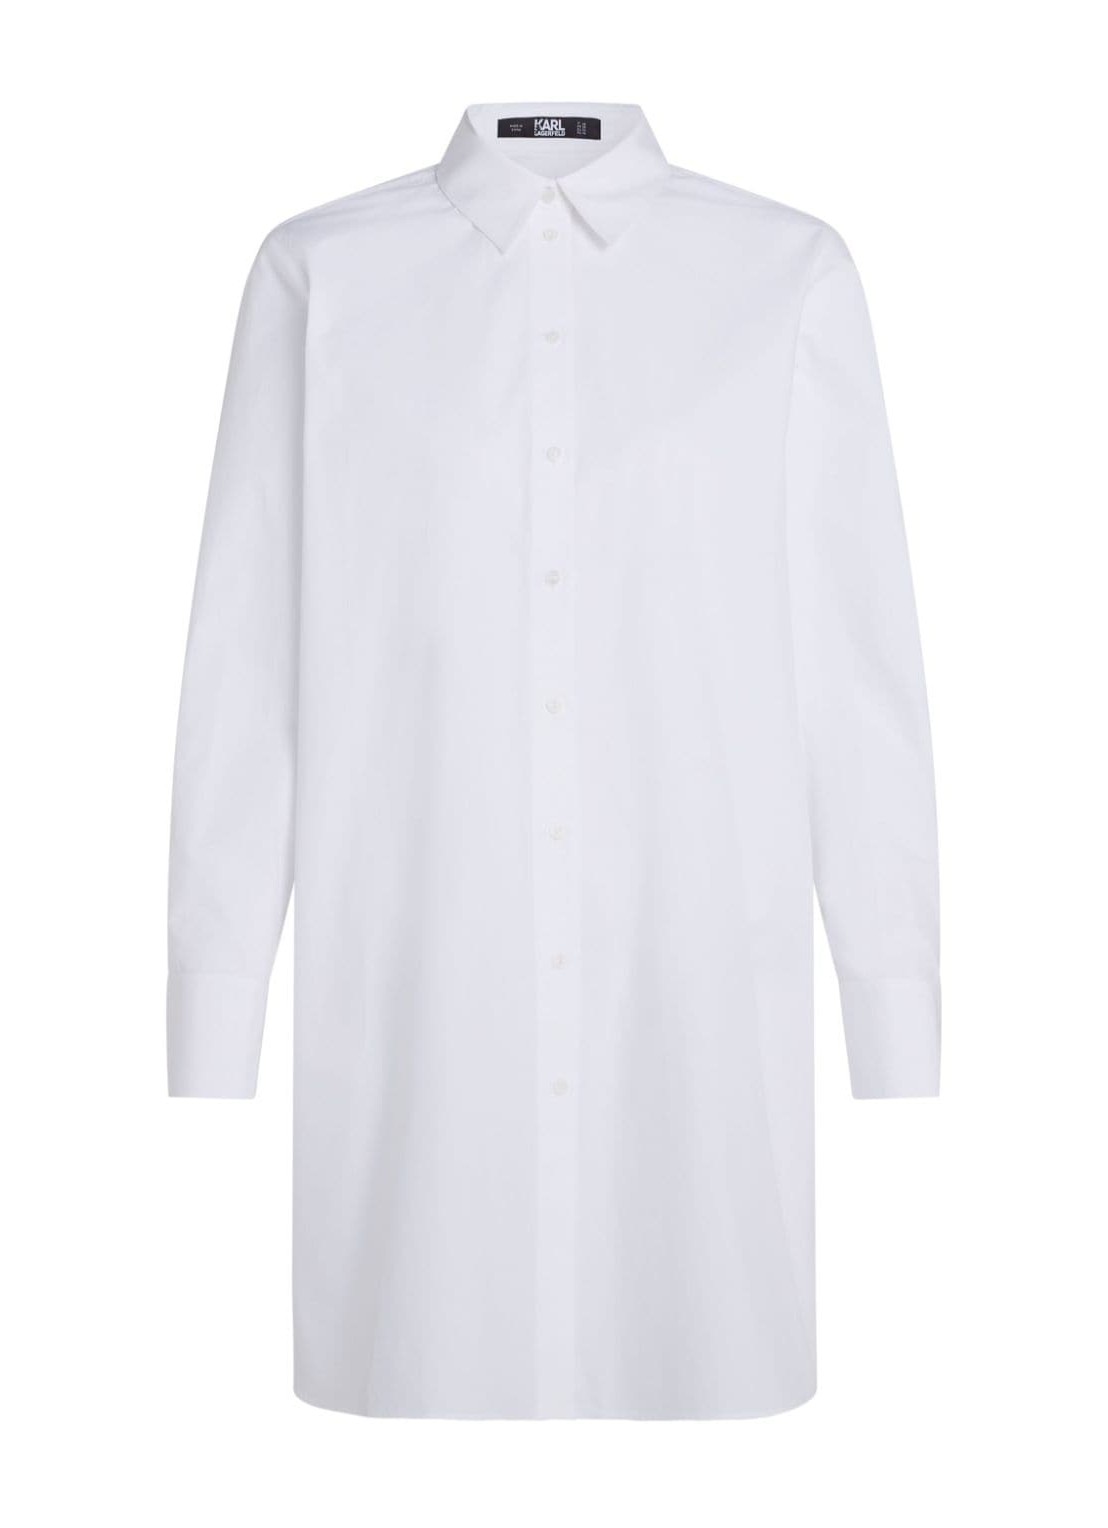 Camiseria karl lagerfeld shirt womanembroidered logo tunic - 241w1604 100 talla 40
 